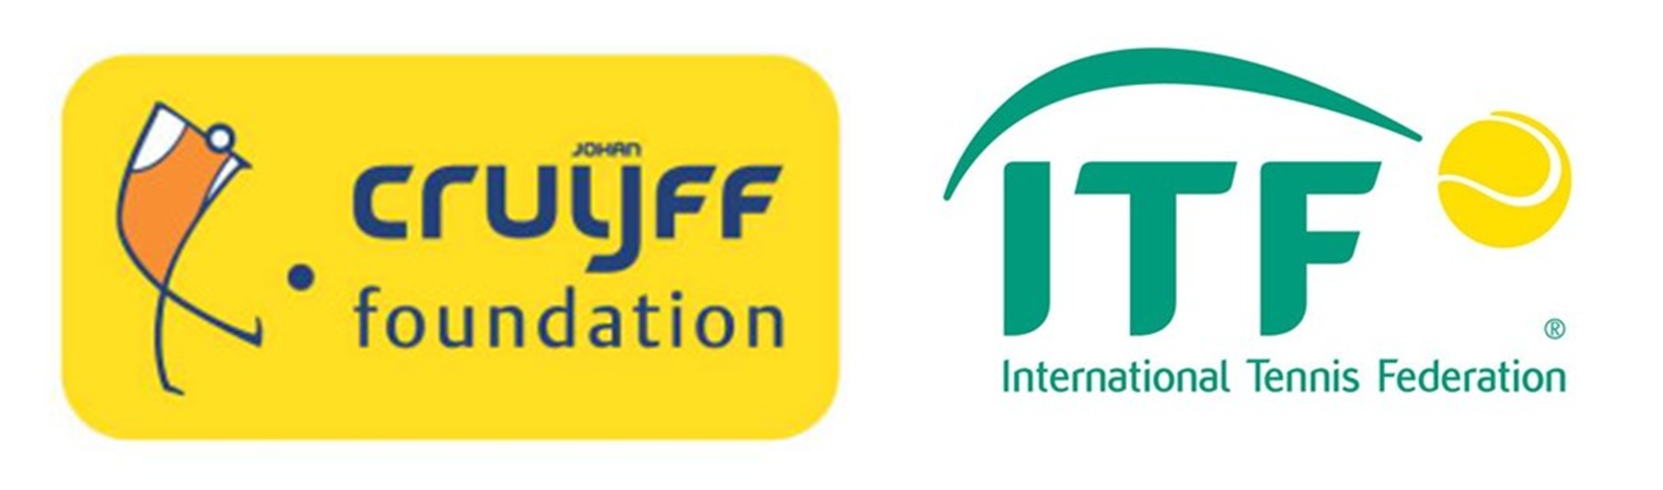 Johan Cruyff Foundation extends sponsorship